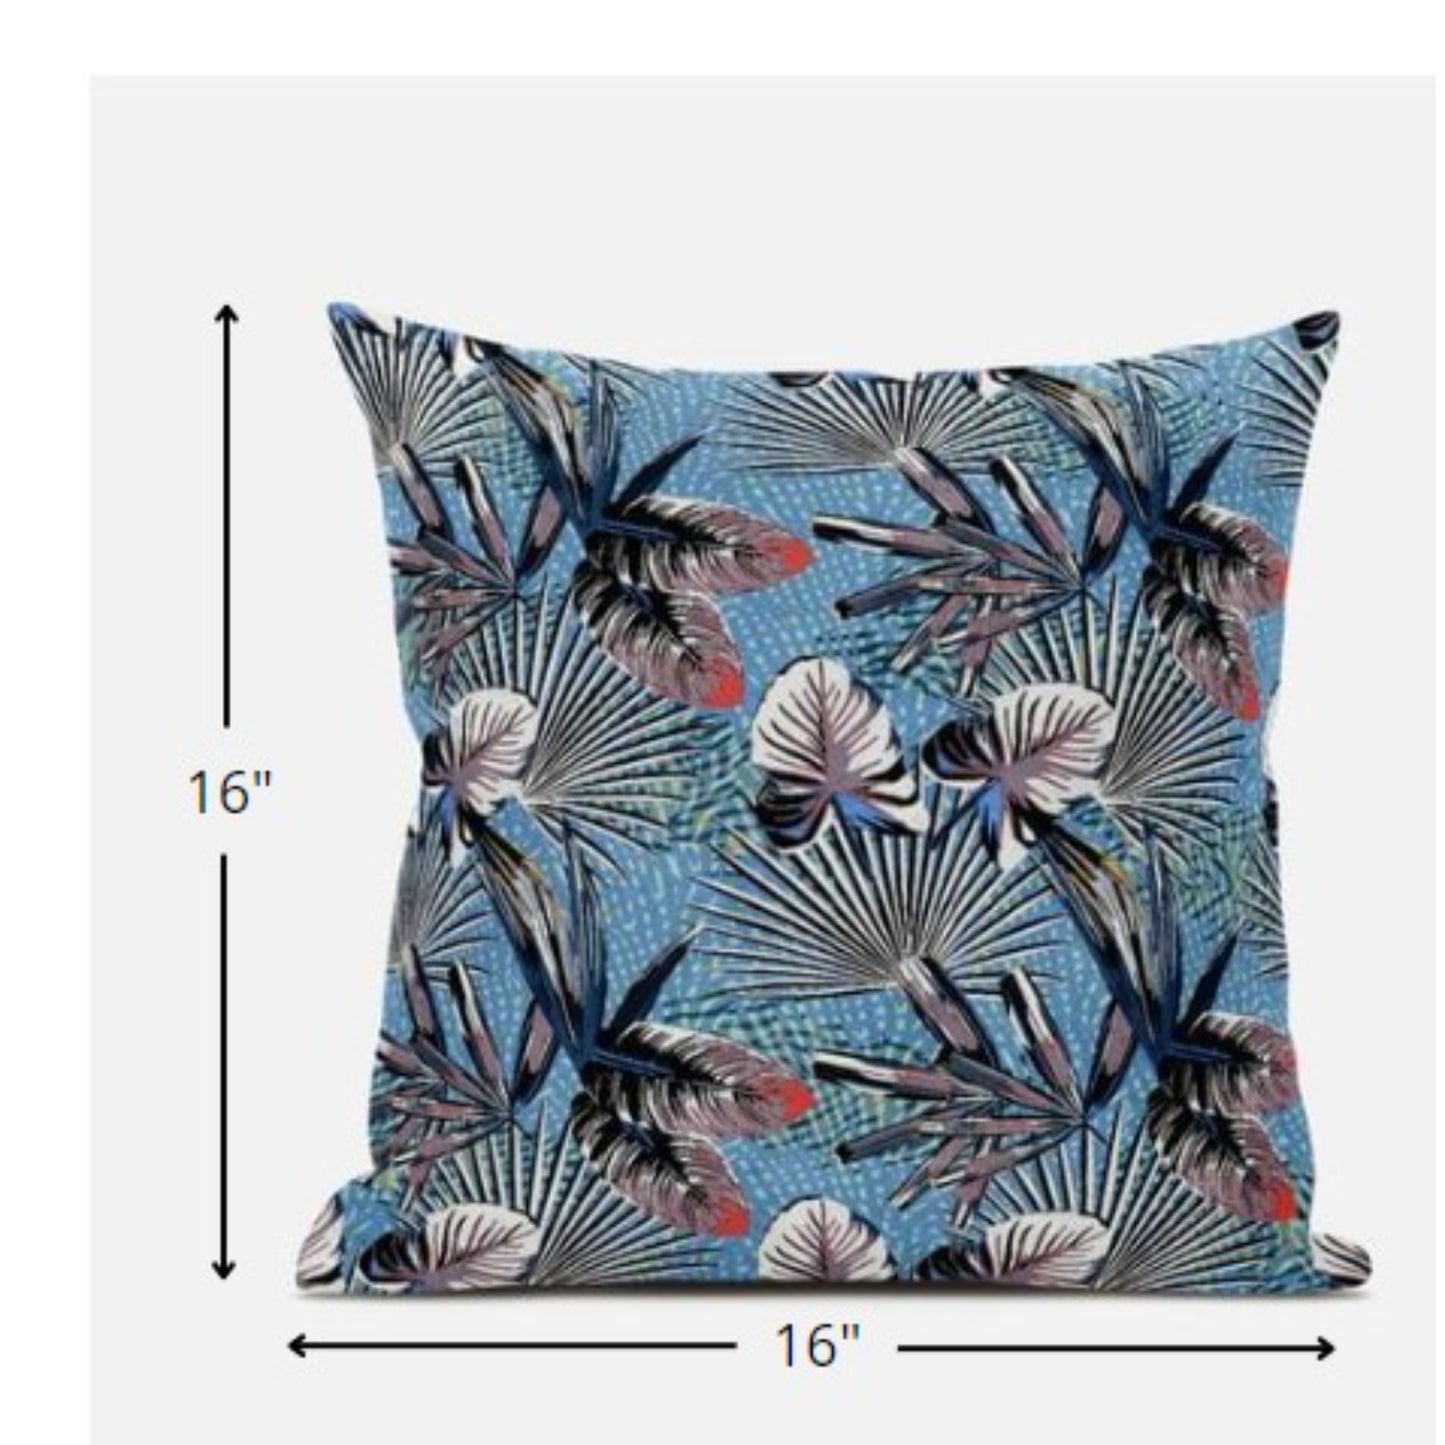 16” Black Blue Tropical Zippered Suede Throw Pillow